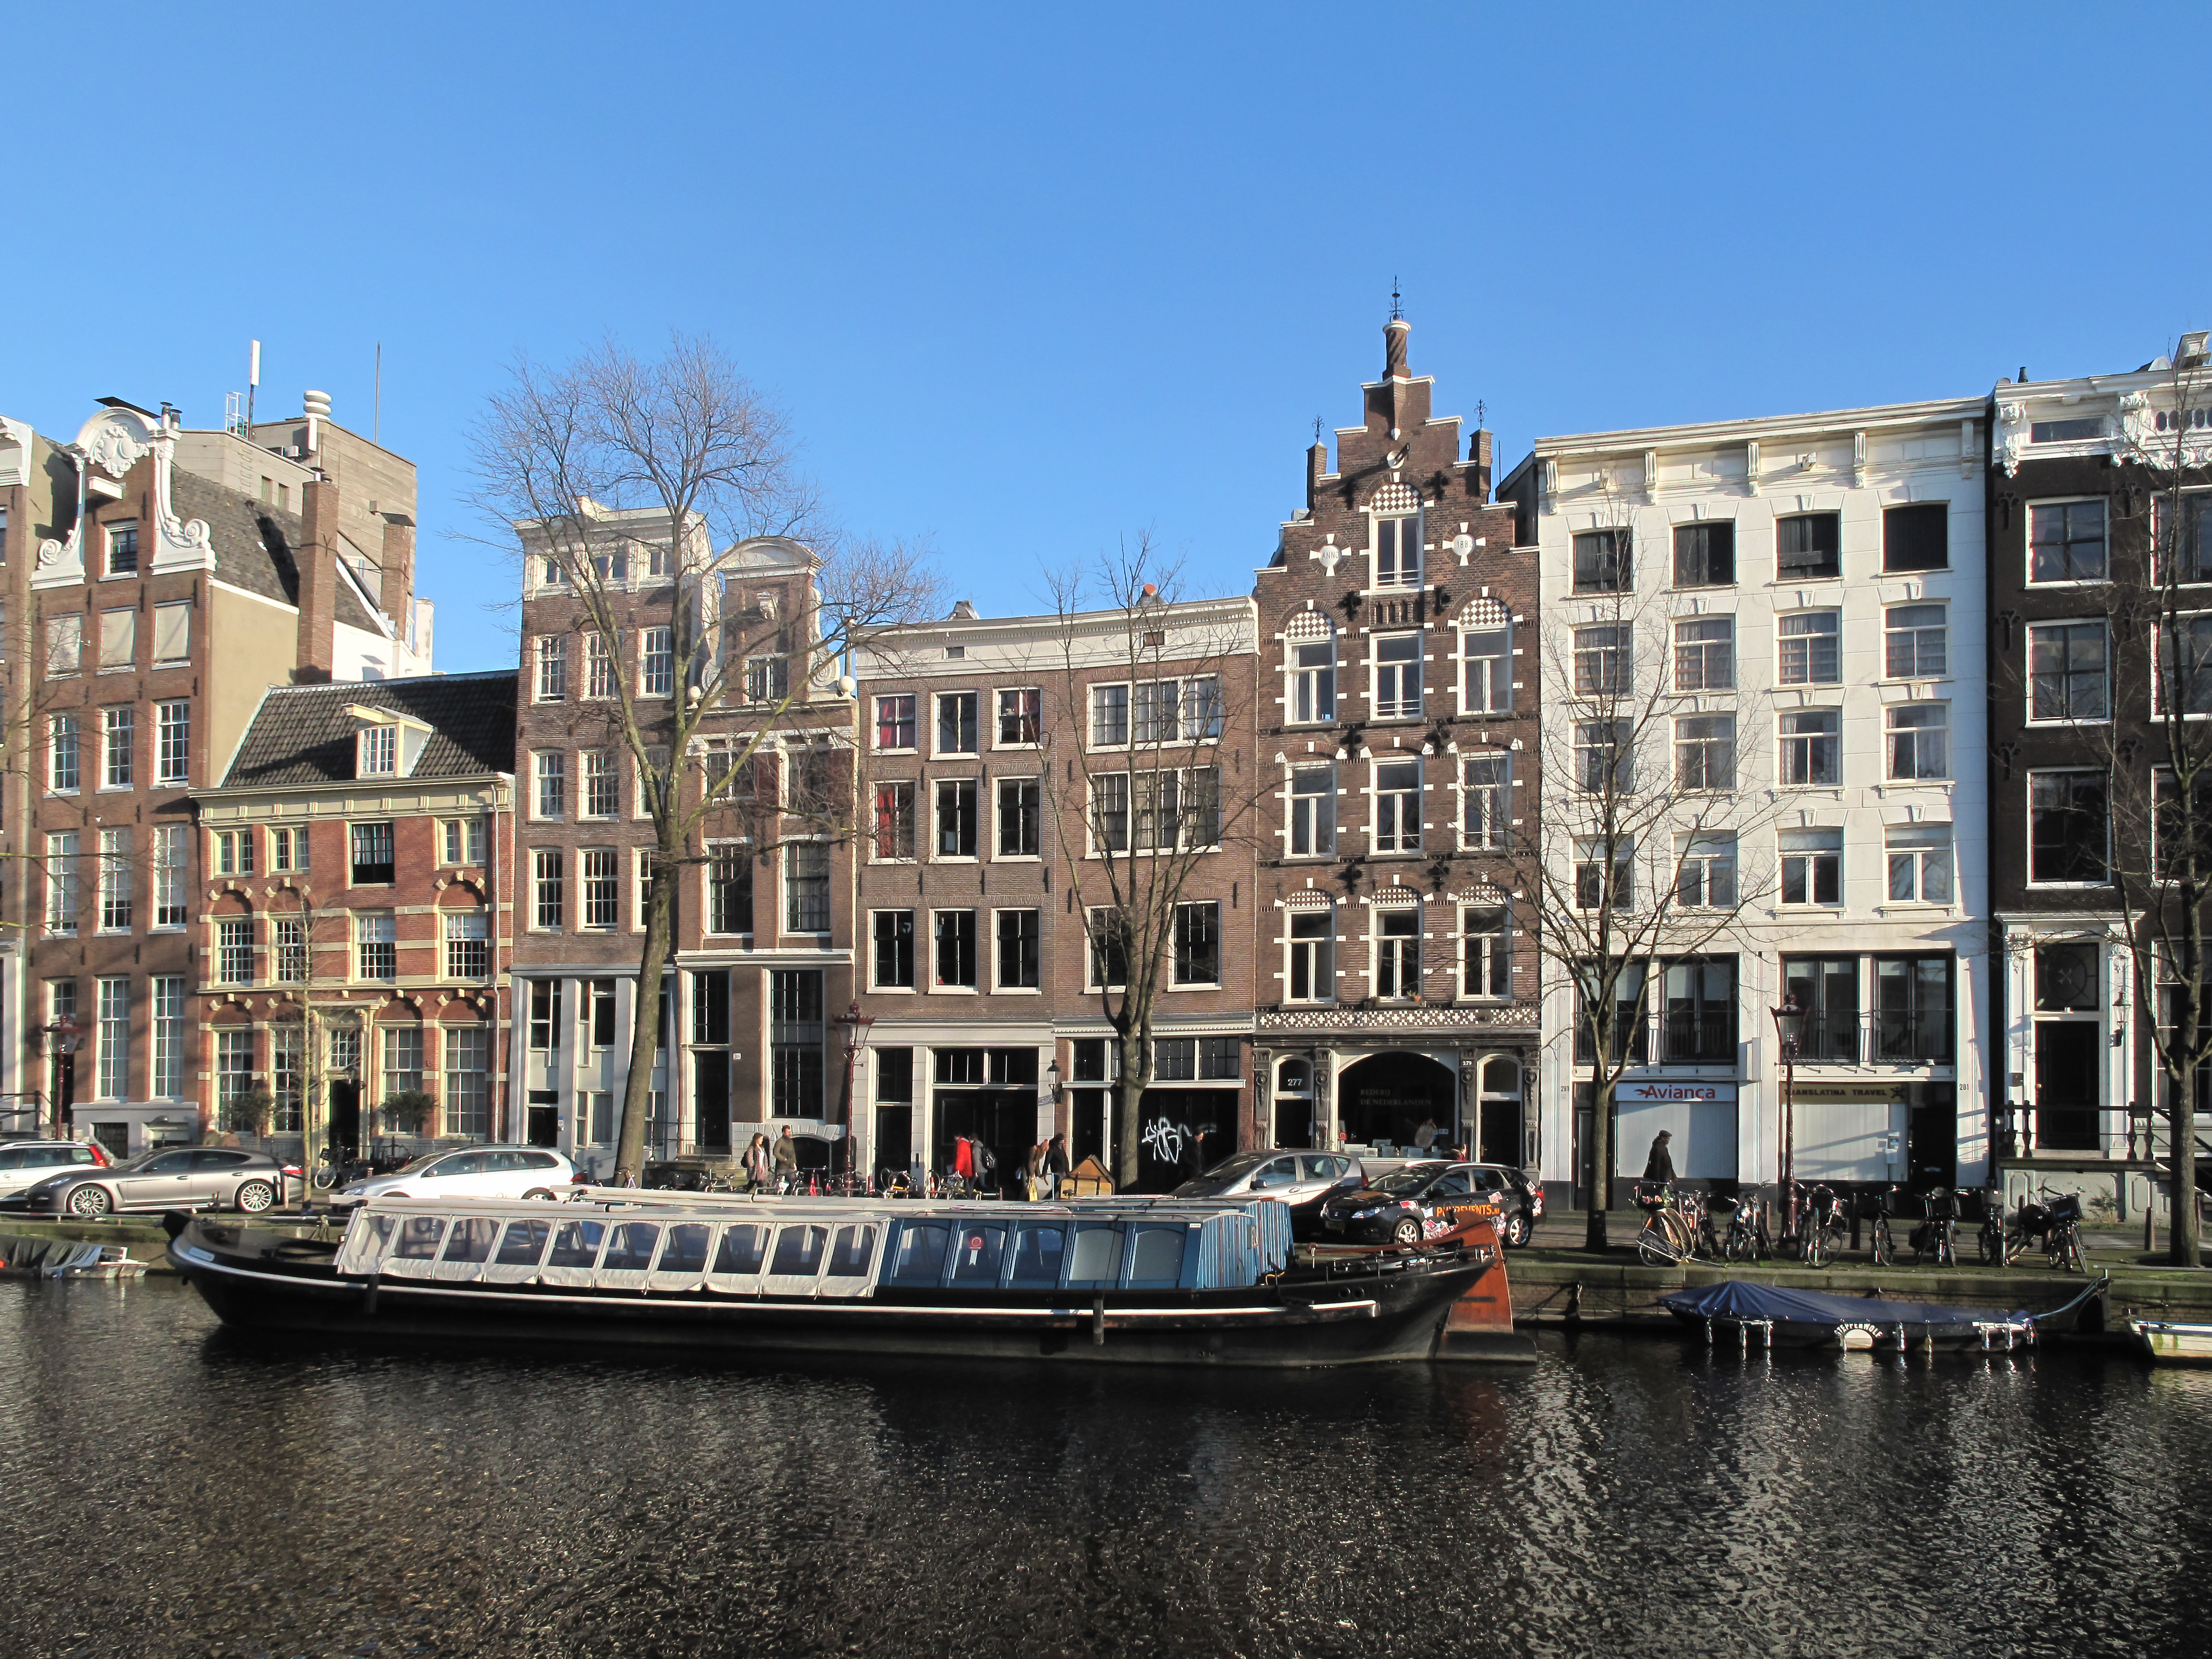 Bijdragen Verzwakken Wasserette File:Amsterdam, straatzicht de Singel rond 277 met RM's foto2 2014-01-12  14.30.jpg - Wikimedia Commons